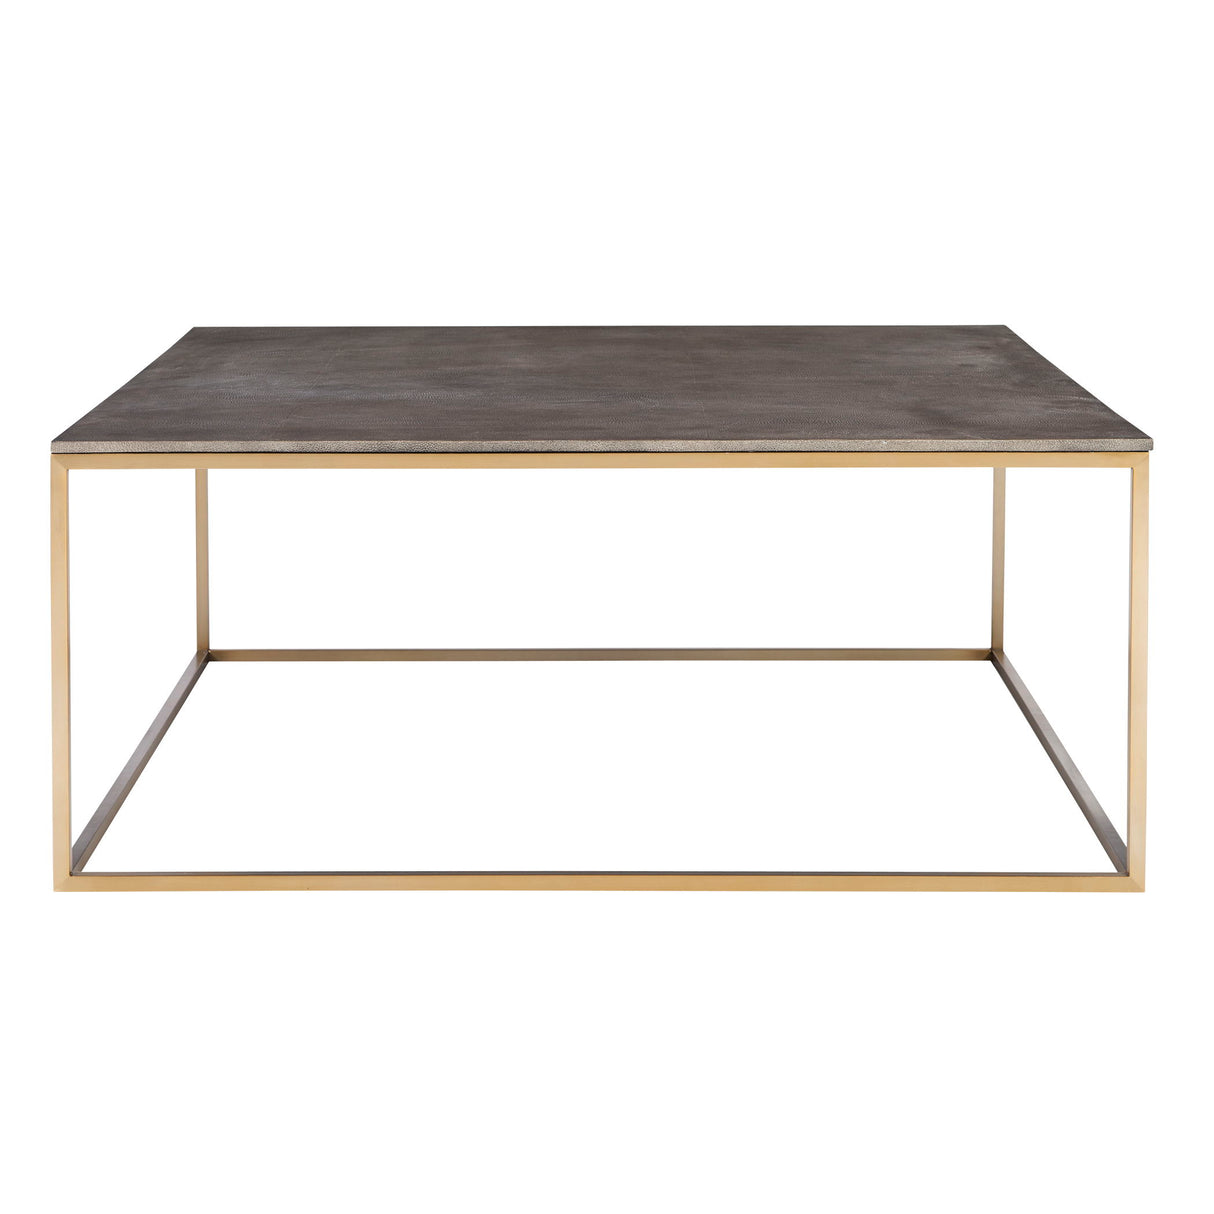 Trebon - Modern Coffee Table - Gray, Dark